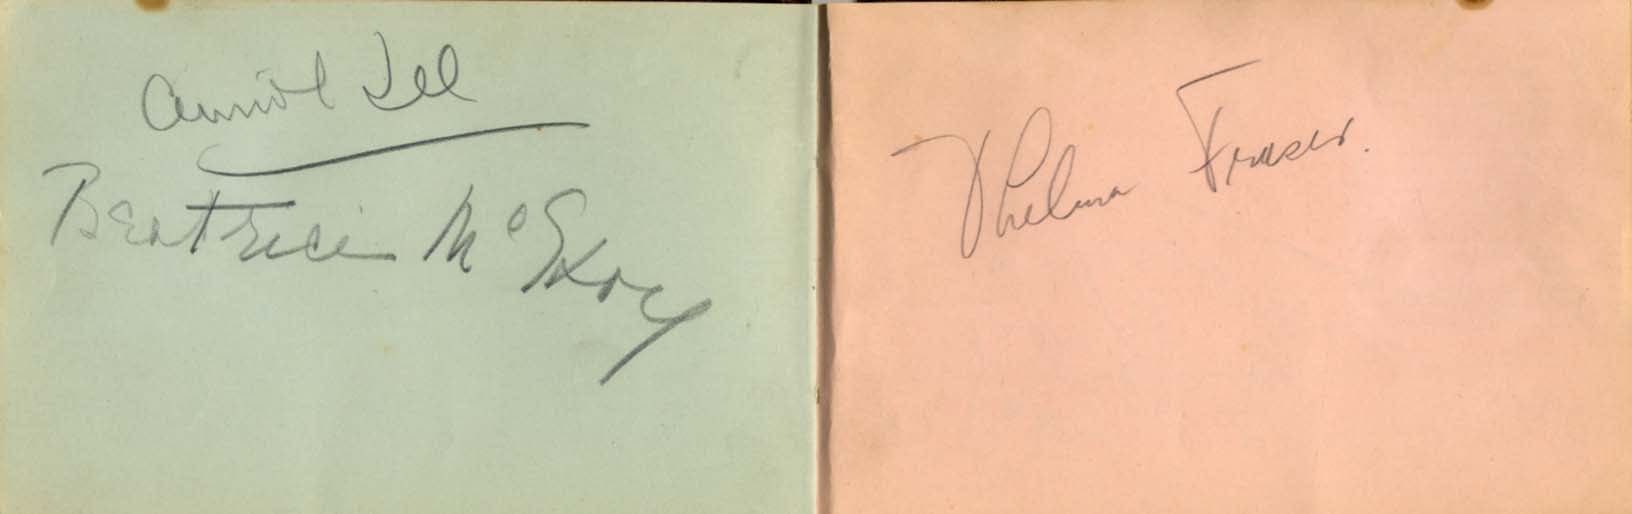 Charlie Chaplin Autograph Autogramm | ID 8296025850005